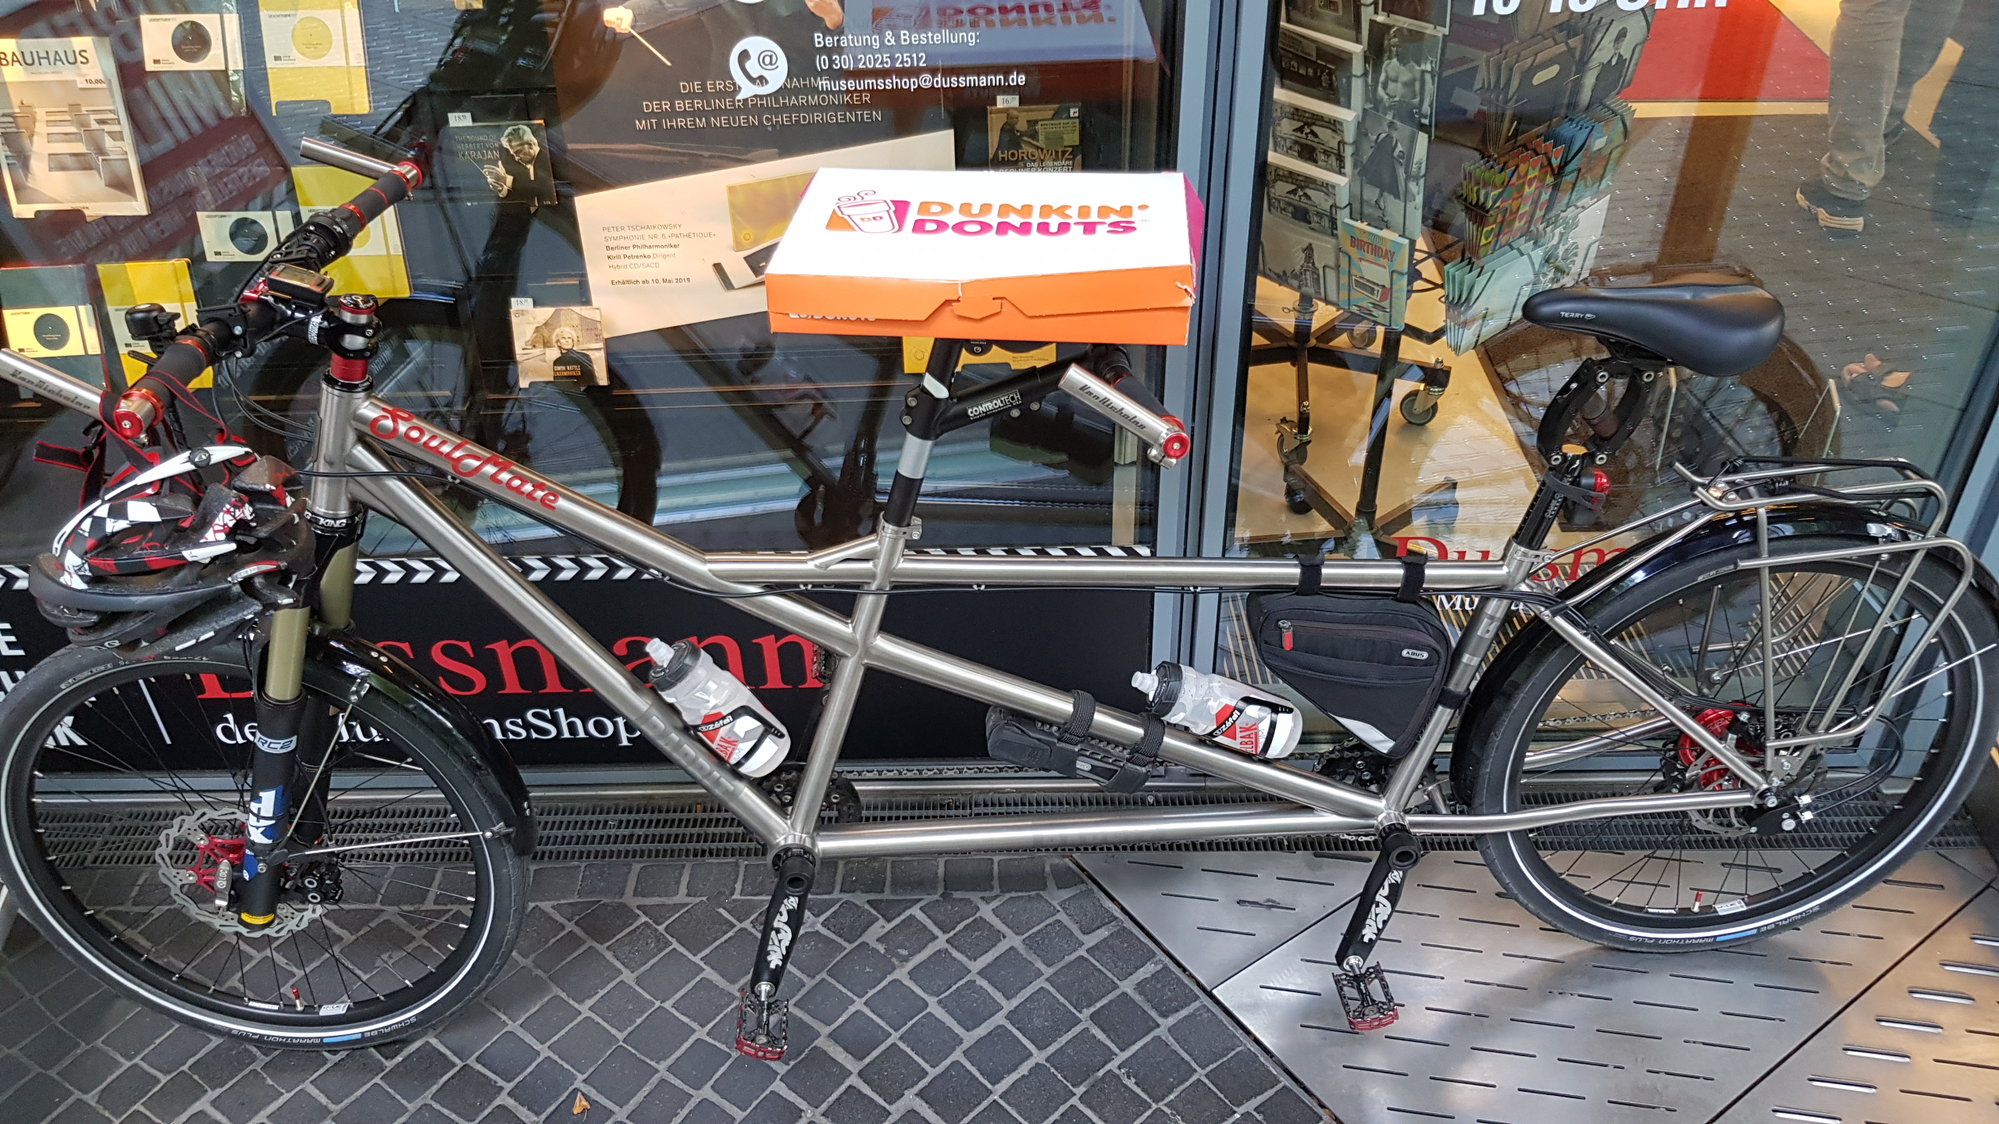 crestline tandem bicycle